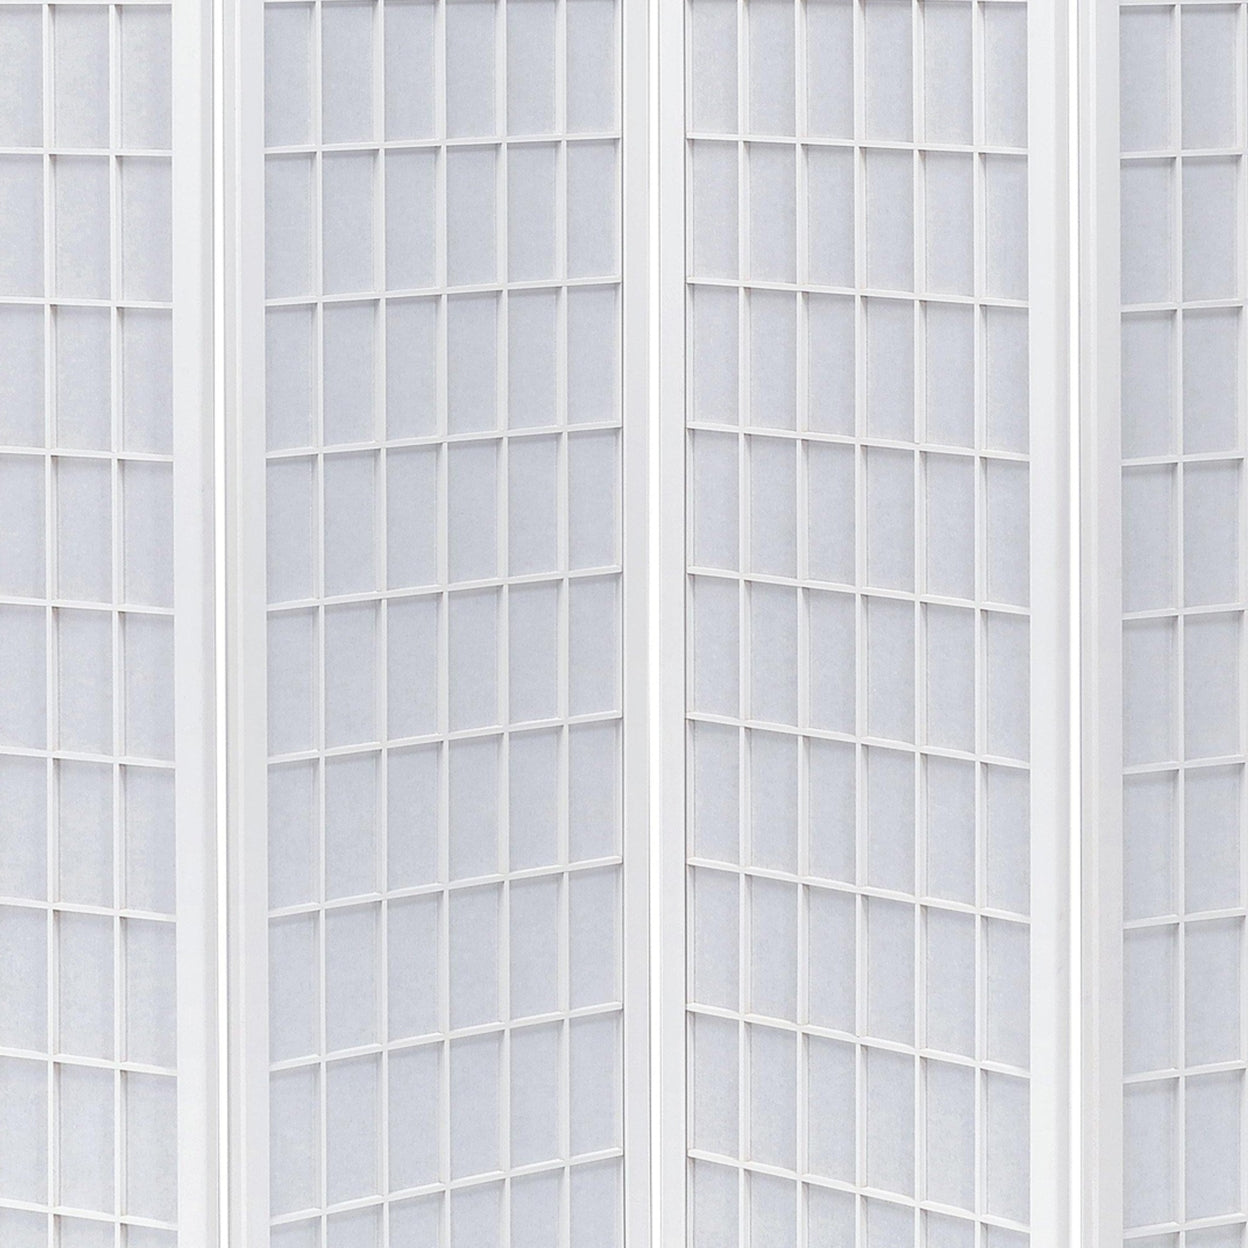 4-panel Folding Screen White